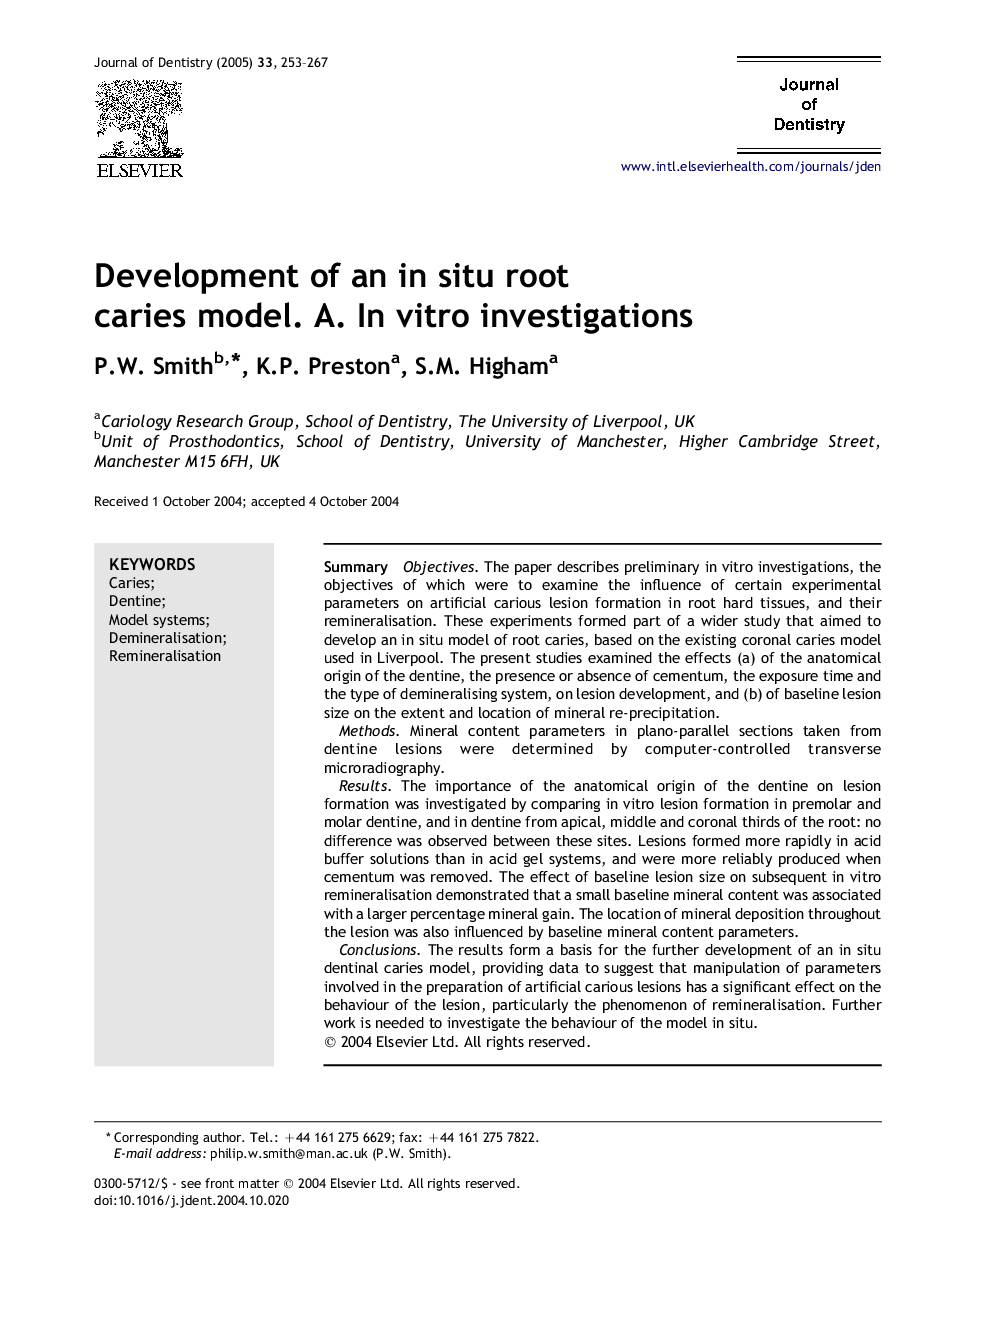 Development of an in situ root caries model. A. In vitro investigations